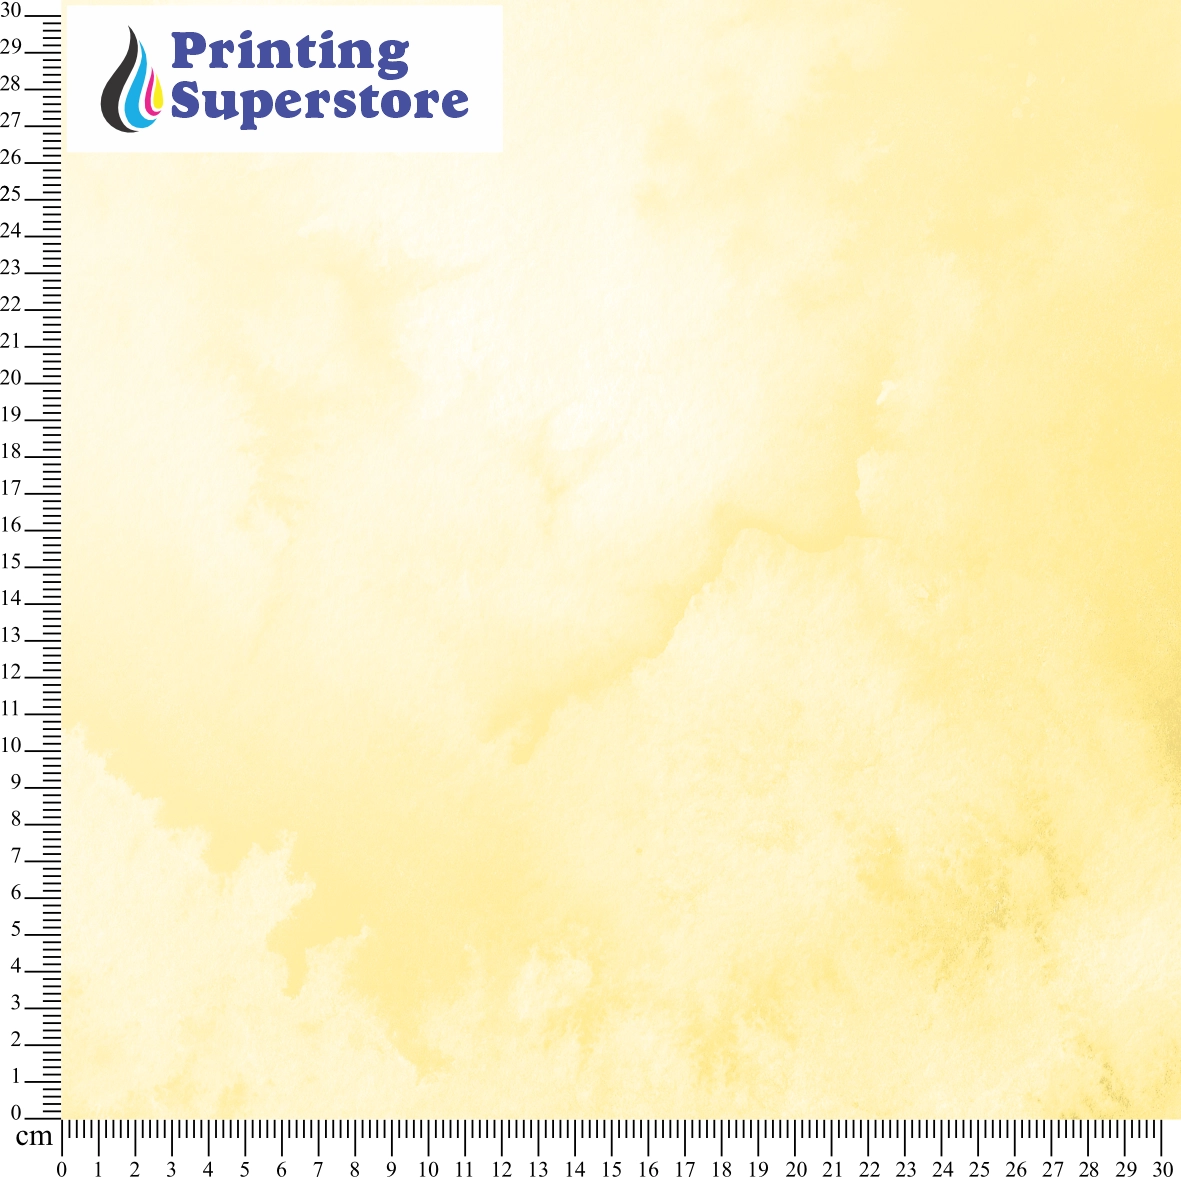 Yellow Watercolour theme pattern printed on Self Adhesive Vinyl (SAV), Heat Transfer Vinyl (HTV) and Cardstock.